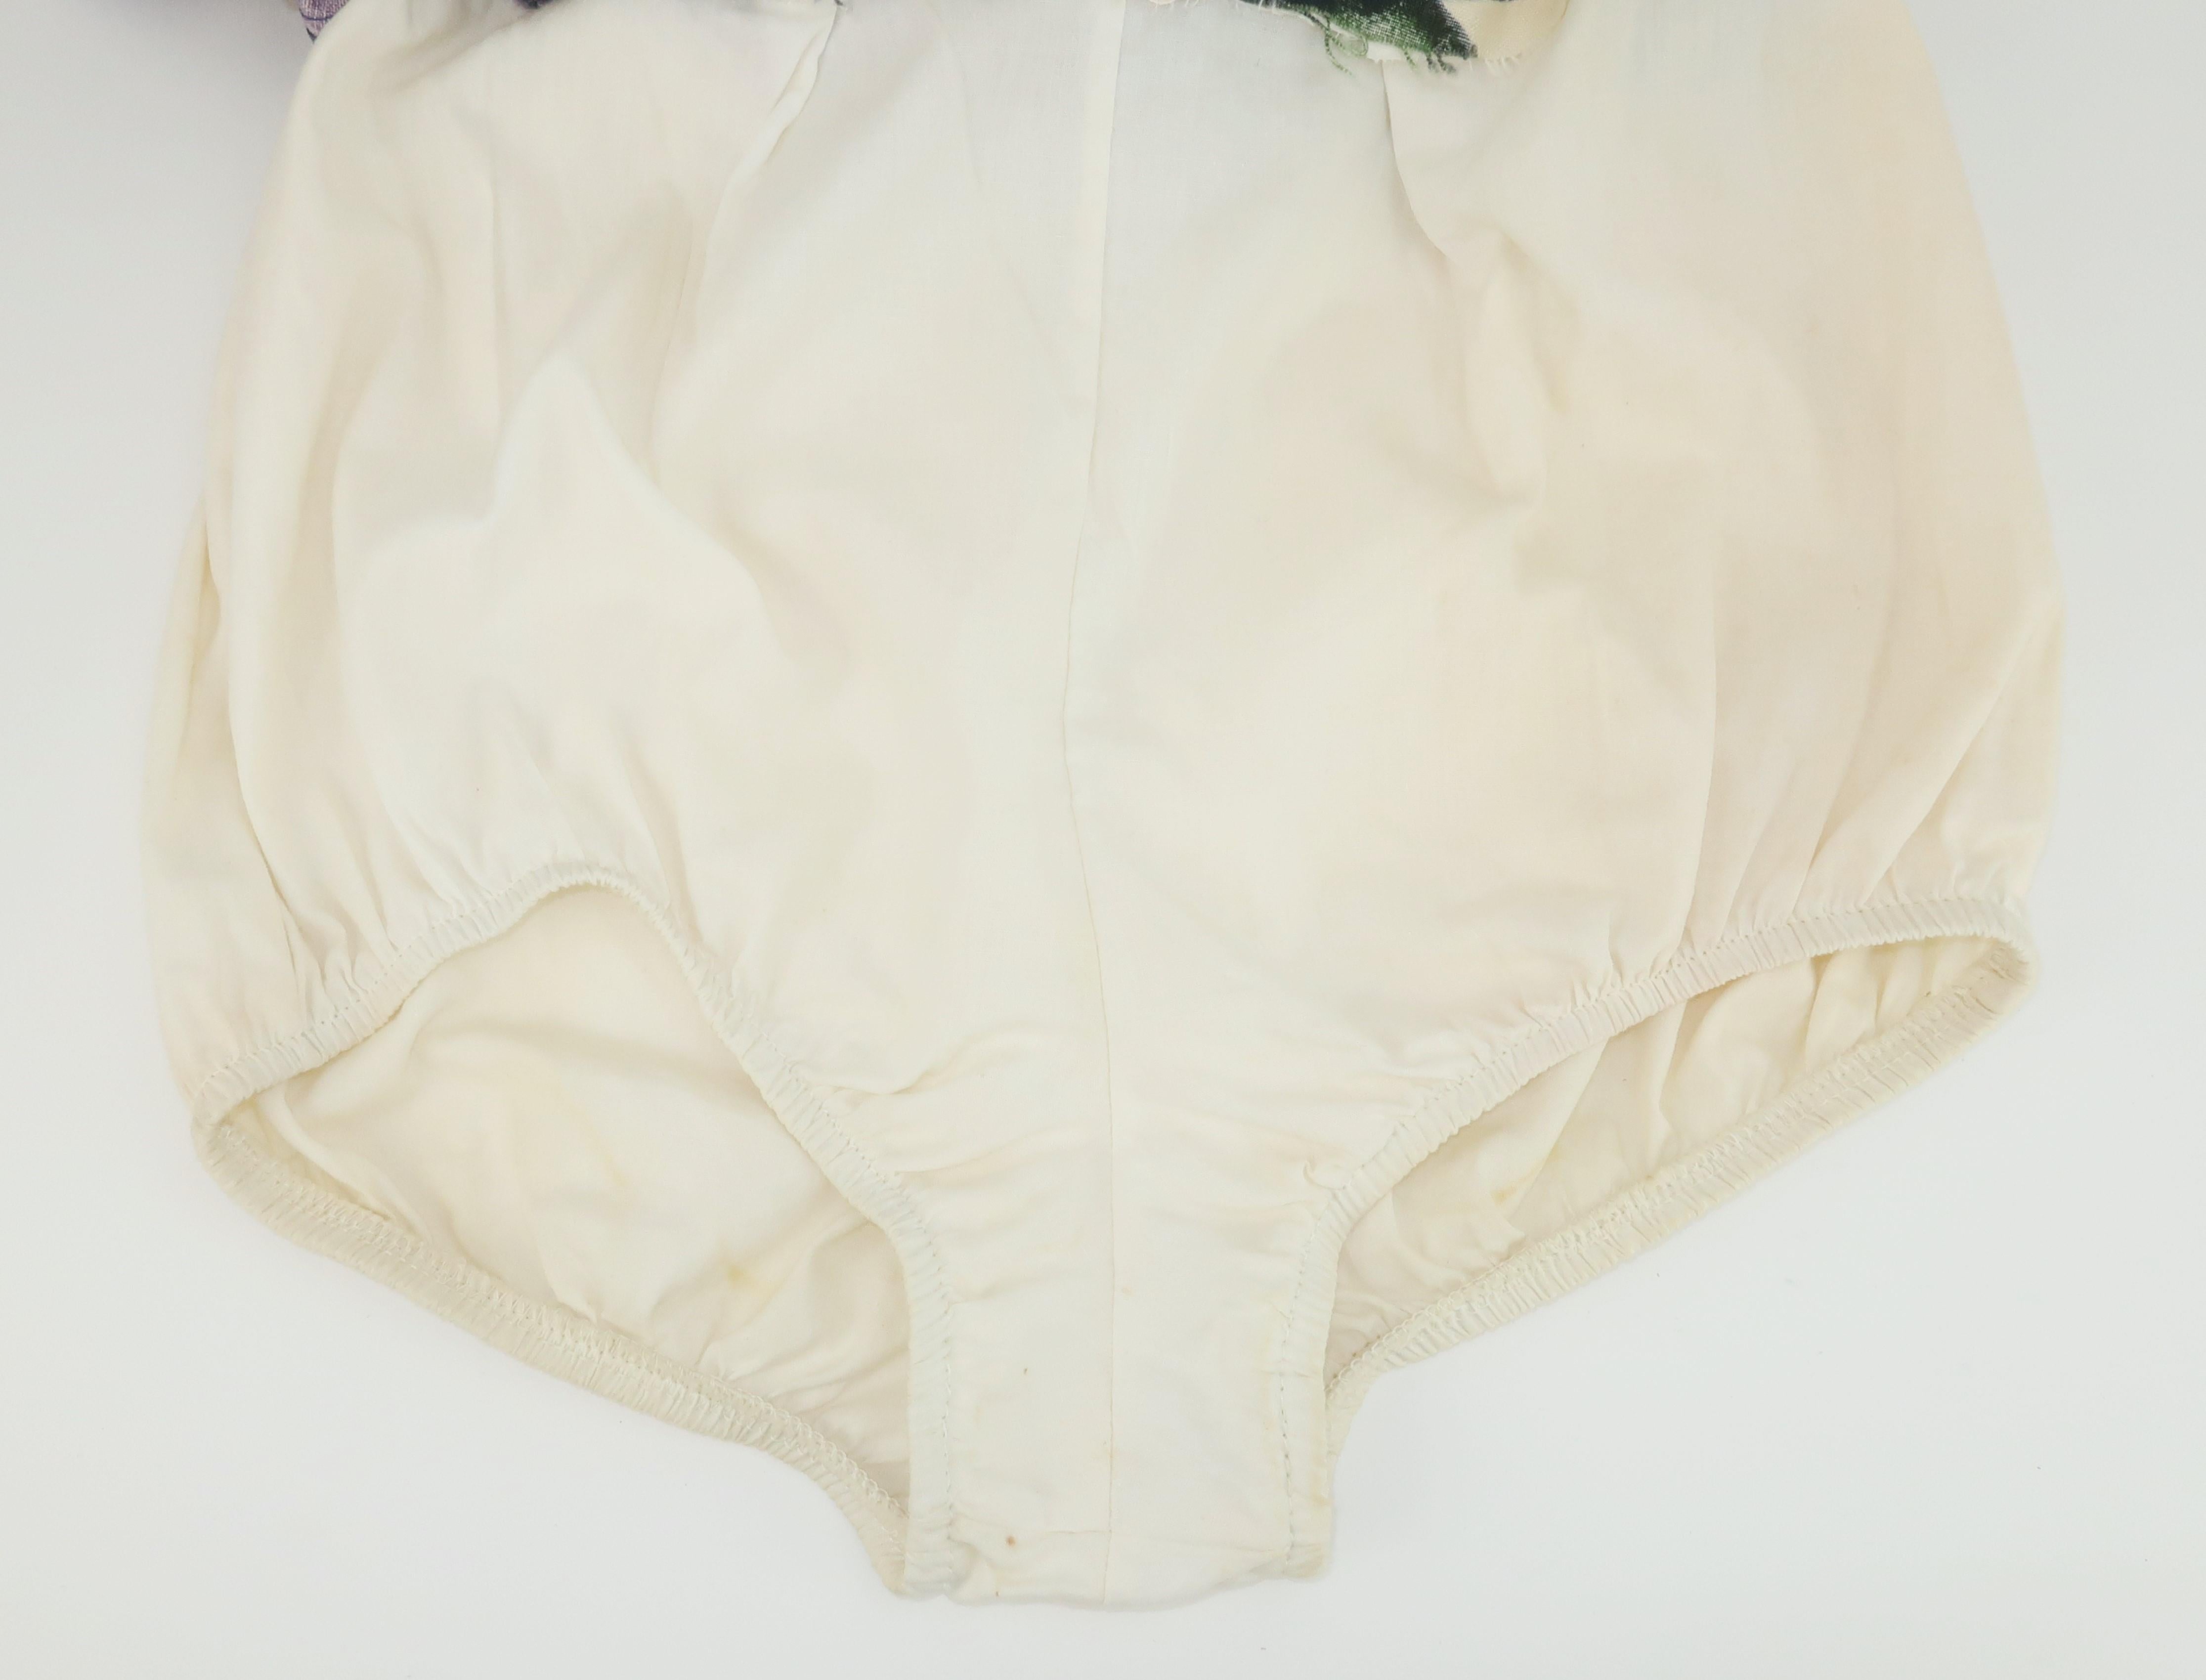 California Floral Cotton Two Piece Bikini Sunsuit Swimsuit, 1960's 10